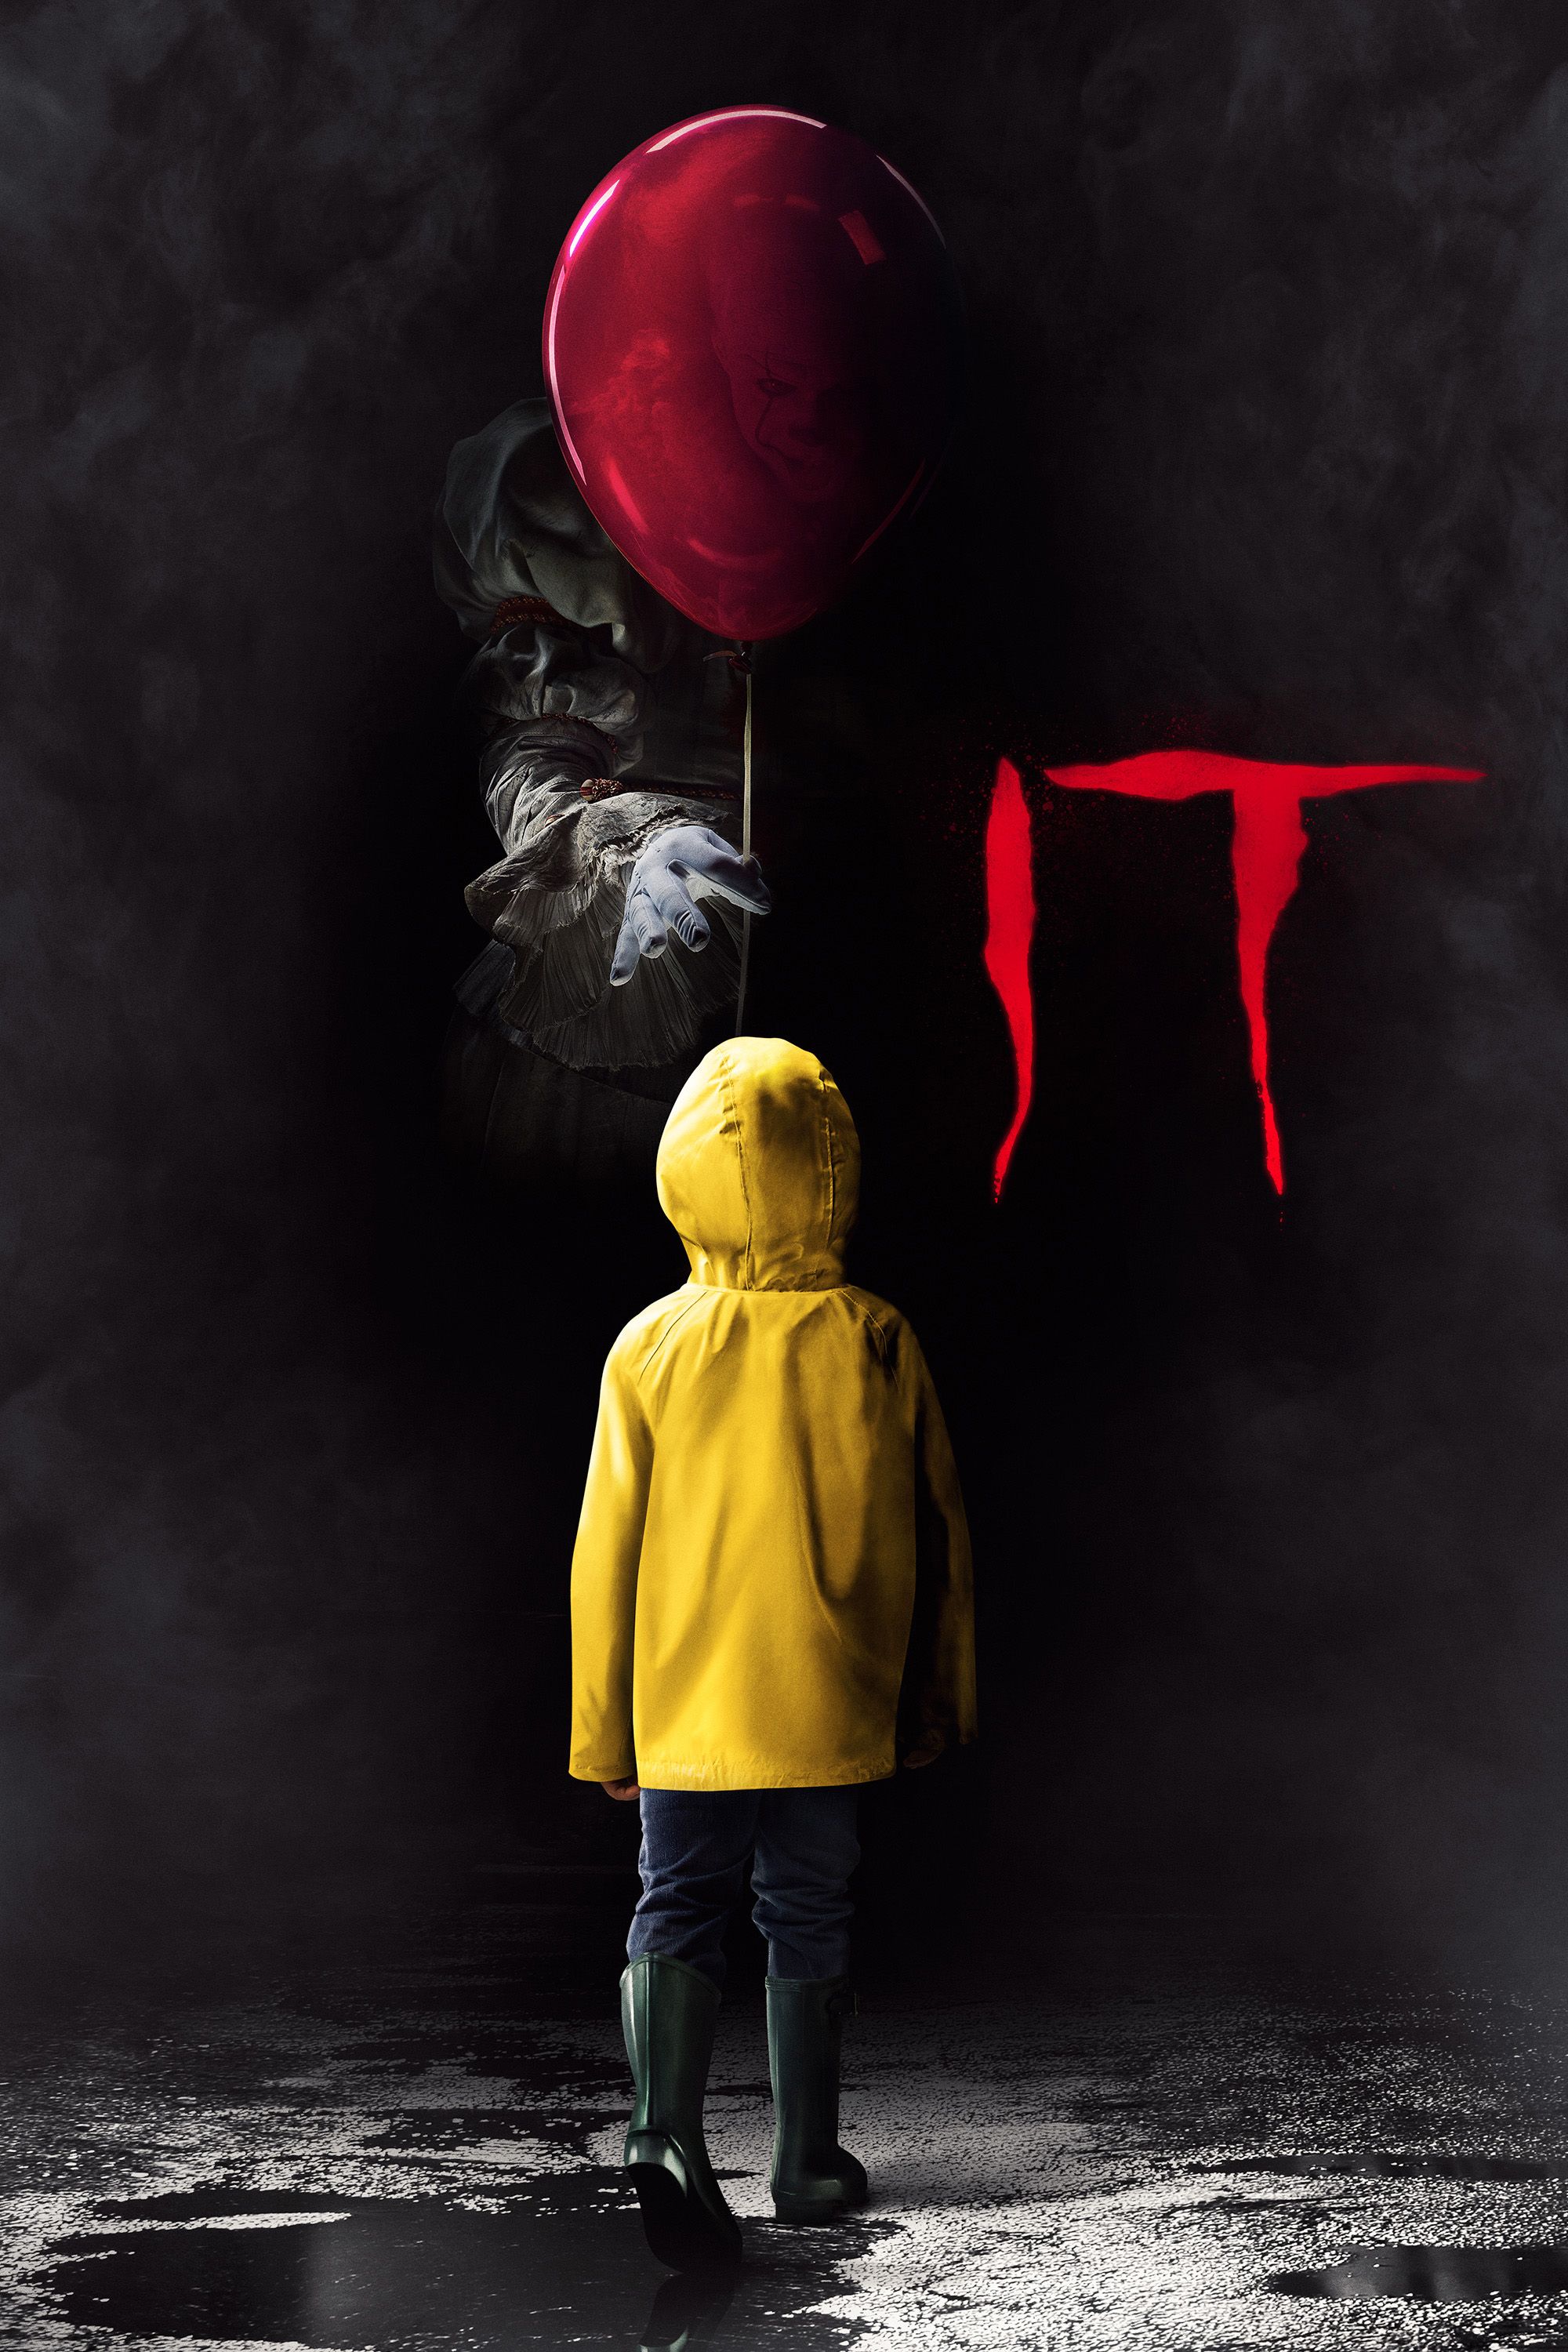 IT (2017) movie poster